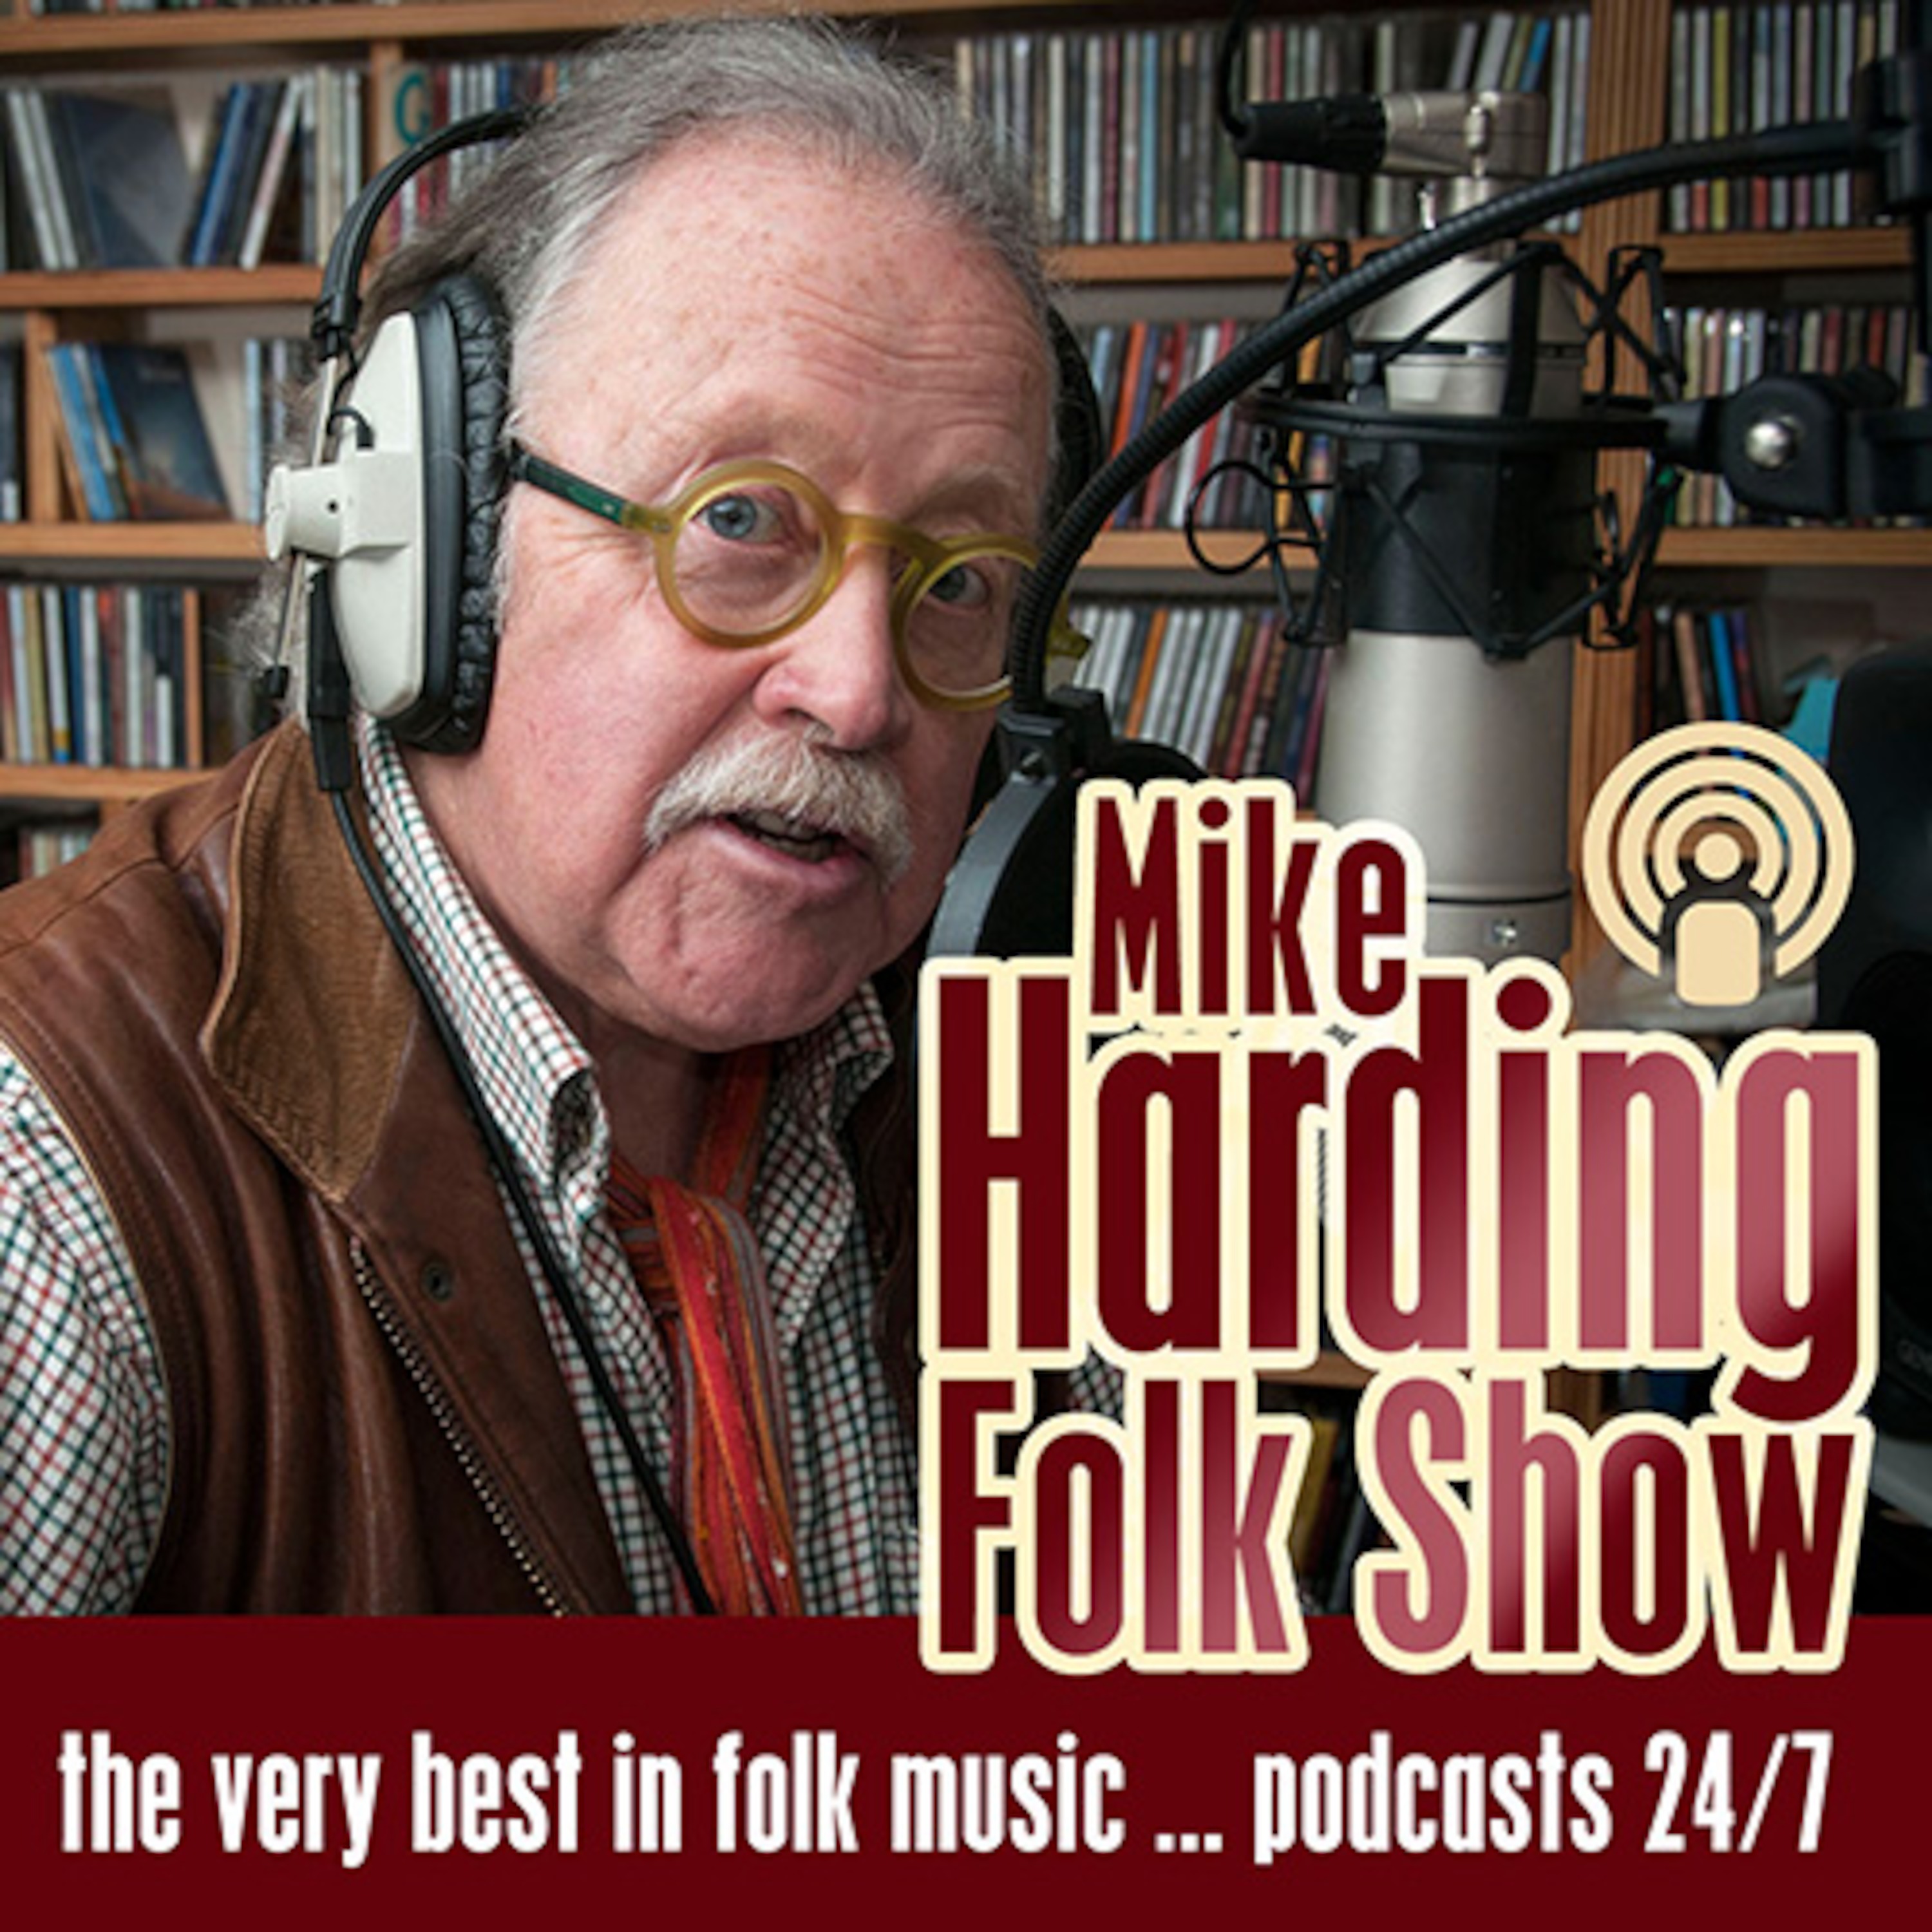 Mike Harding Folk Show 256